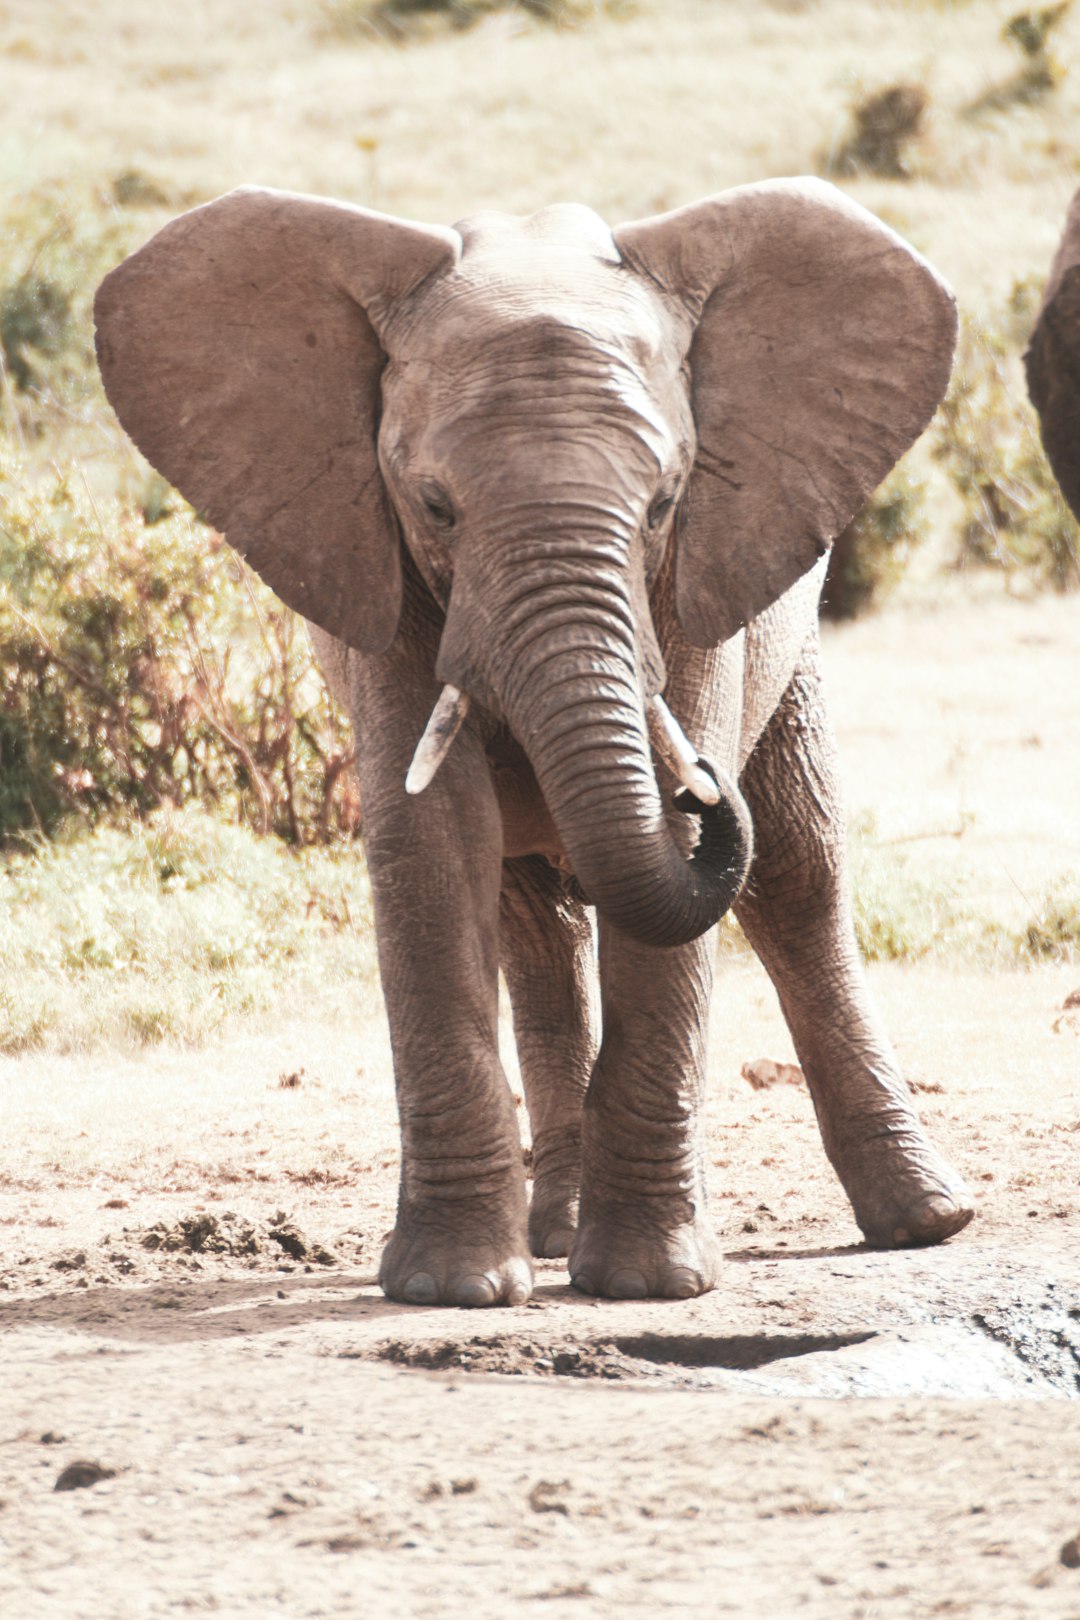 grey elephant walking on dirt ground during daytime